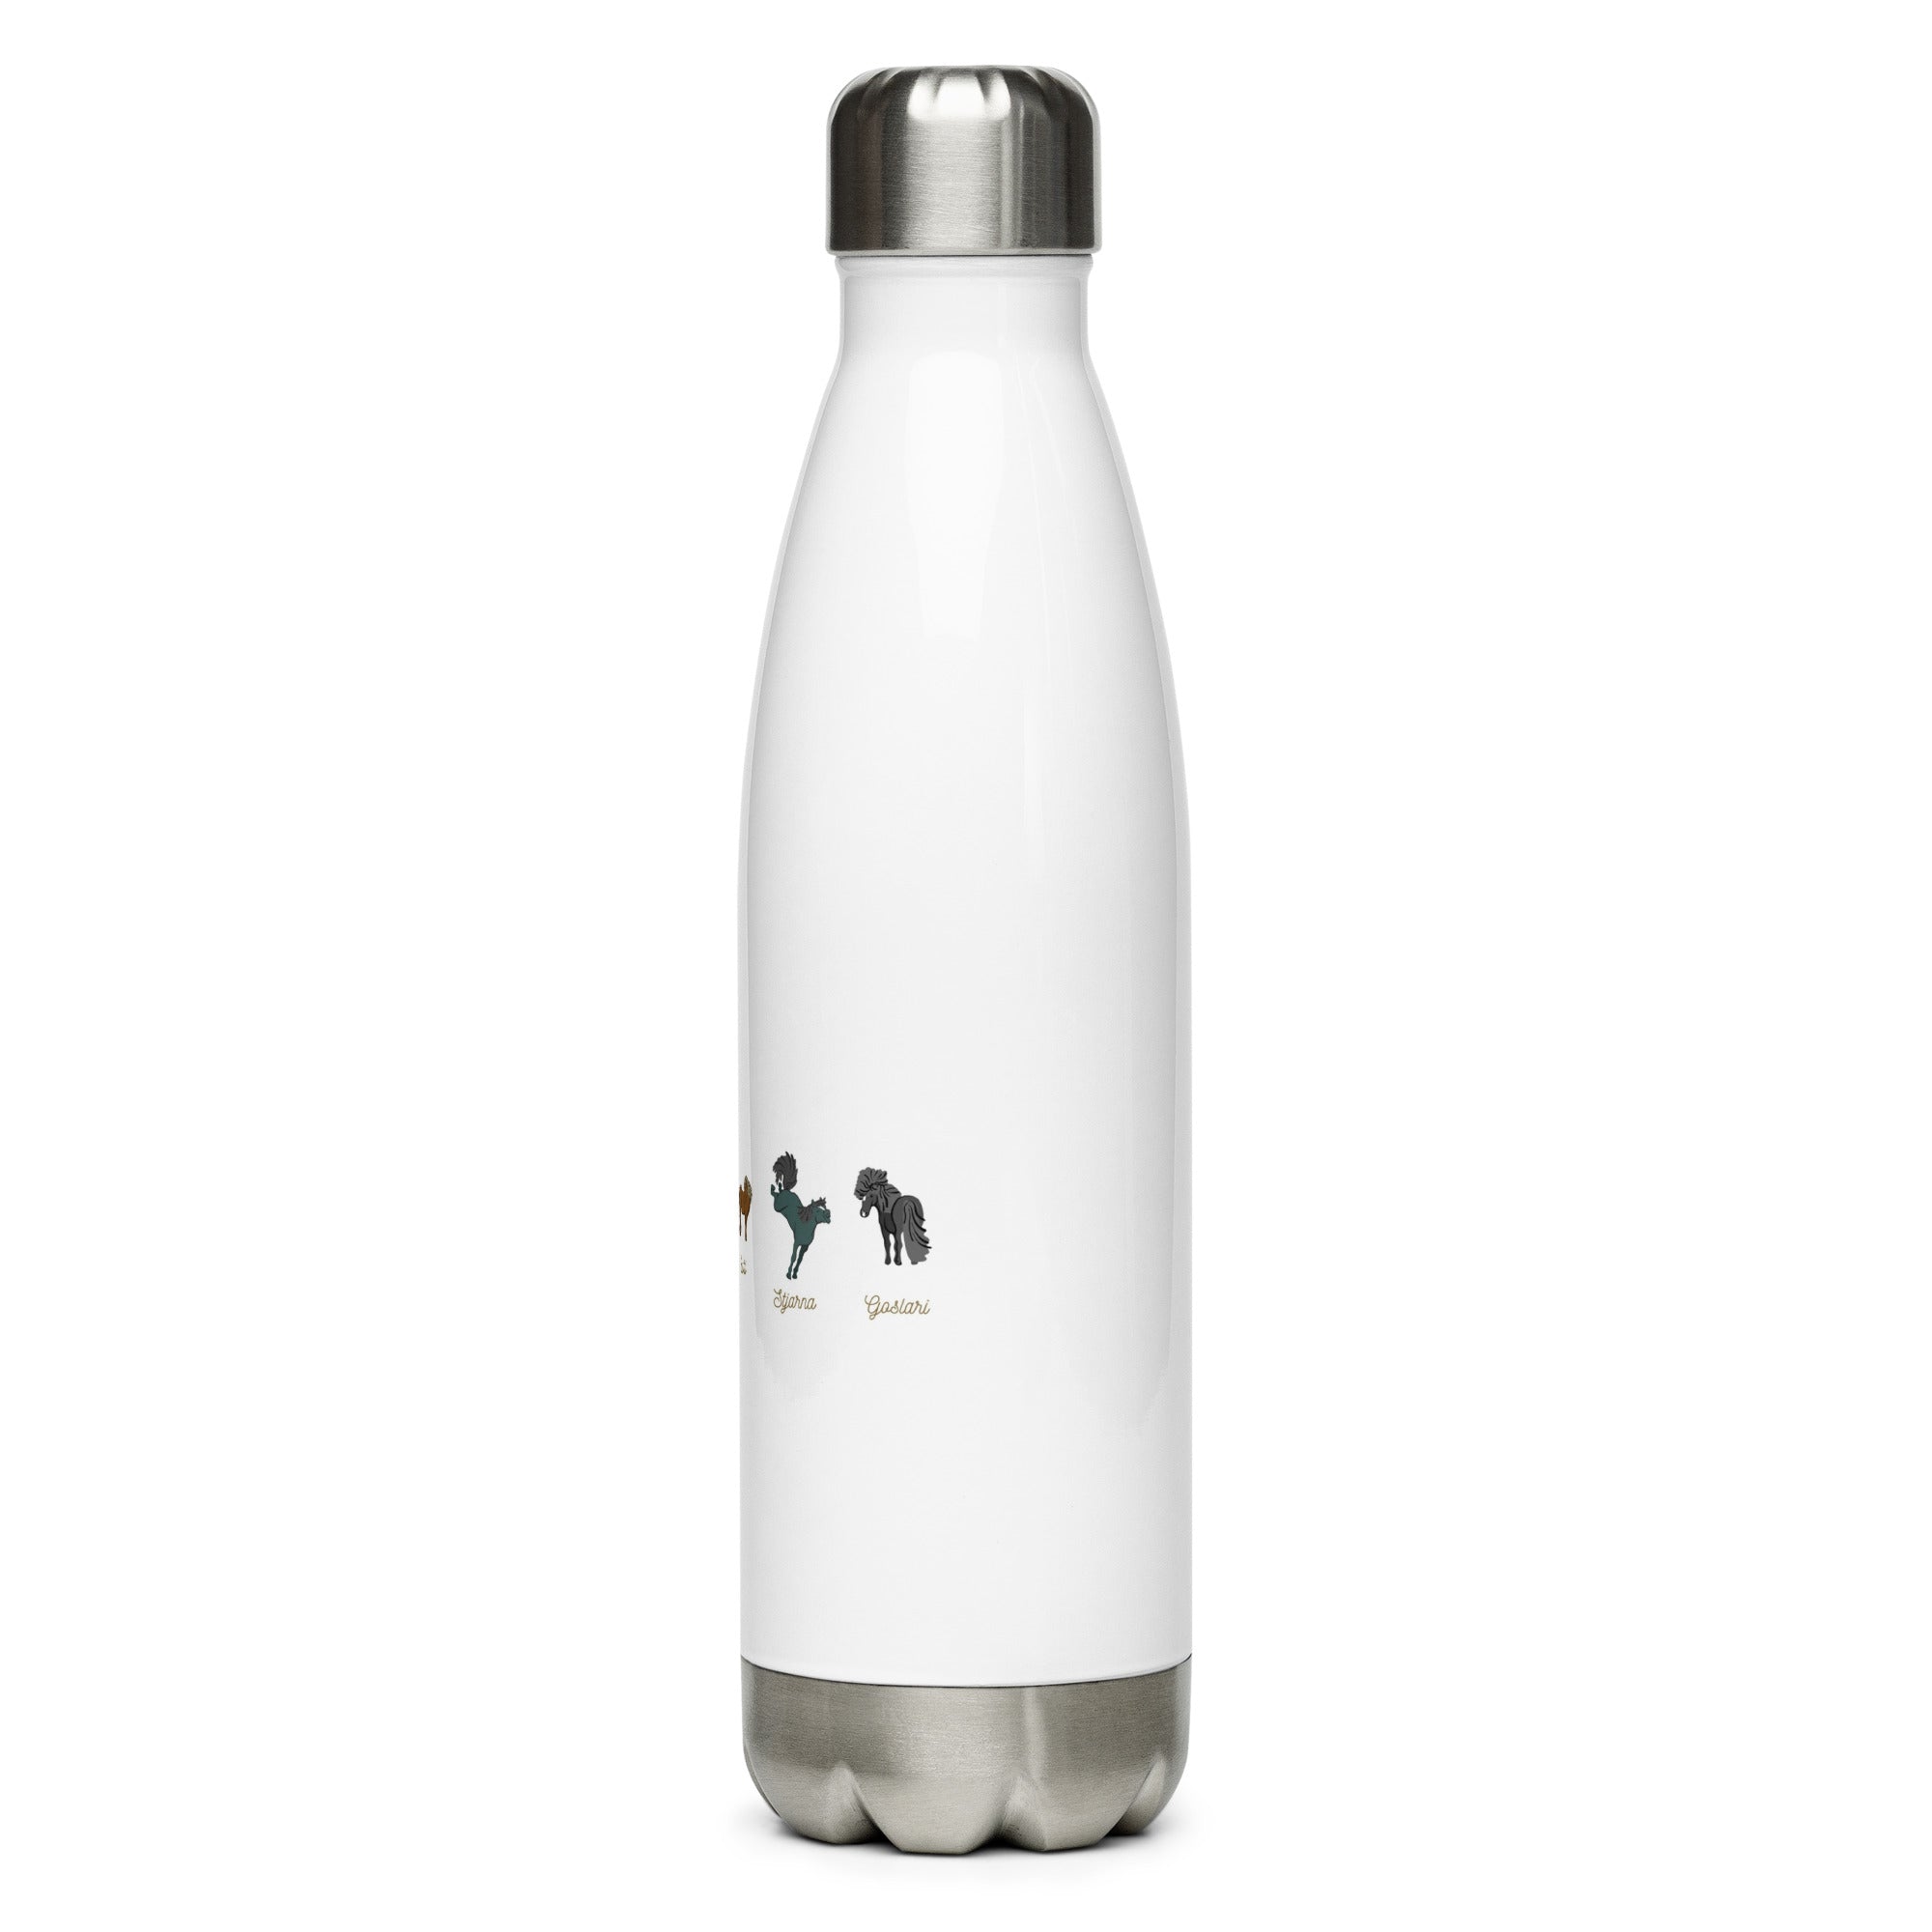 The Herd Stainless Steel Water Bottle